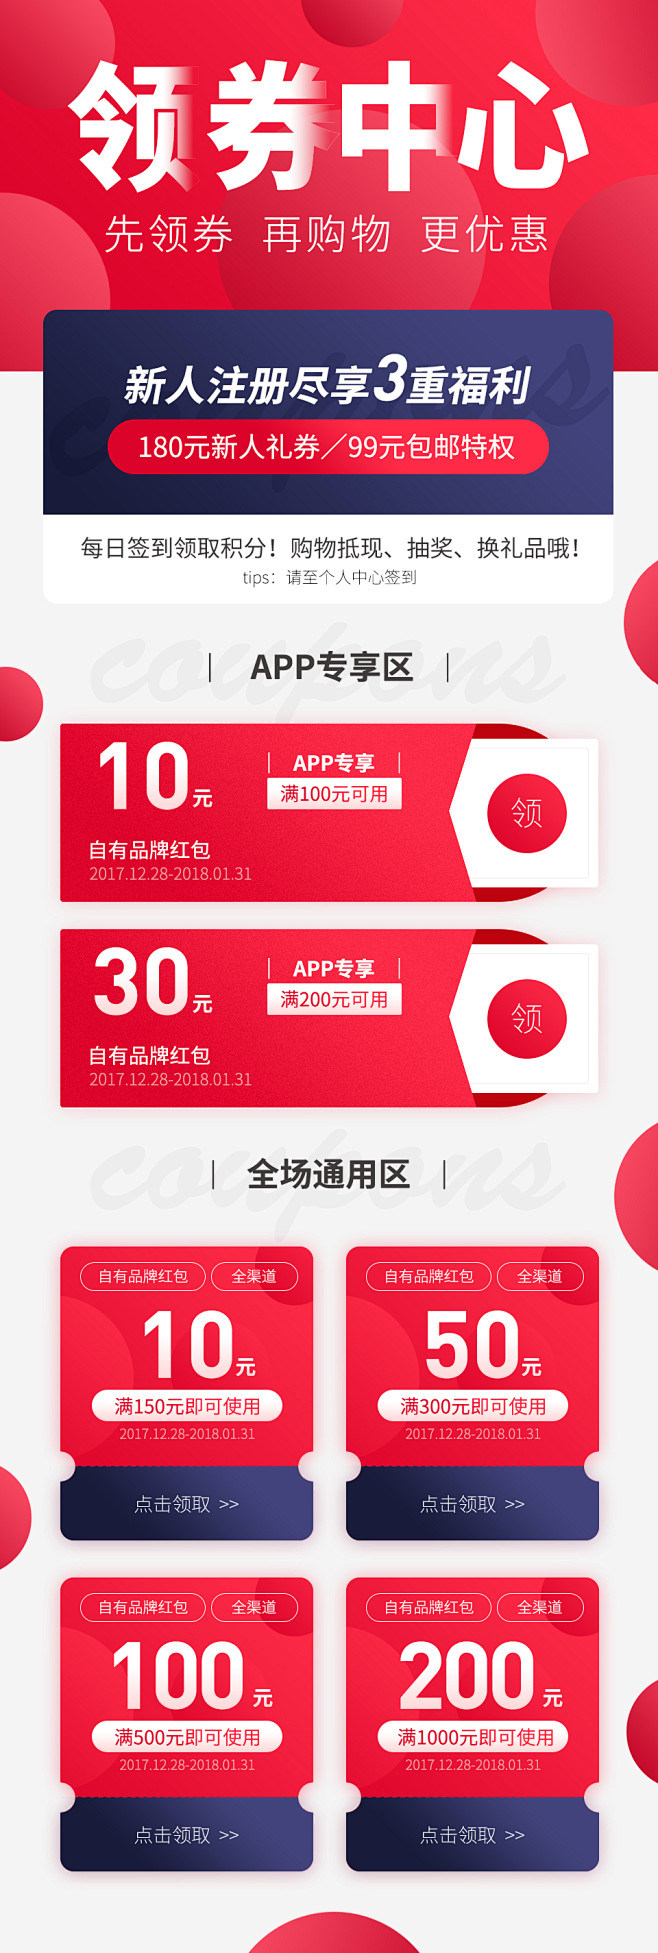 app领券中心_活动页 _T201887...